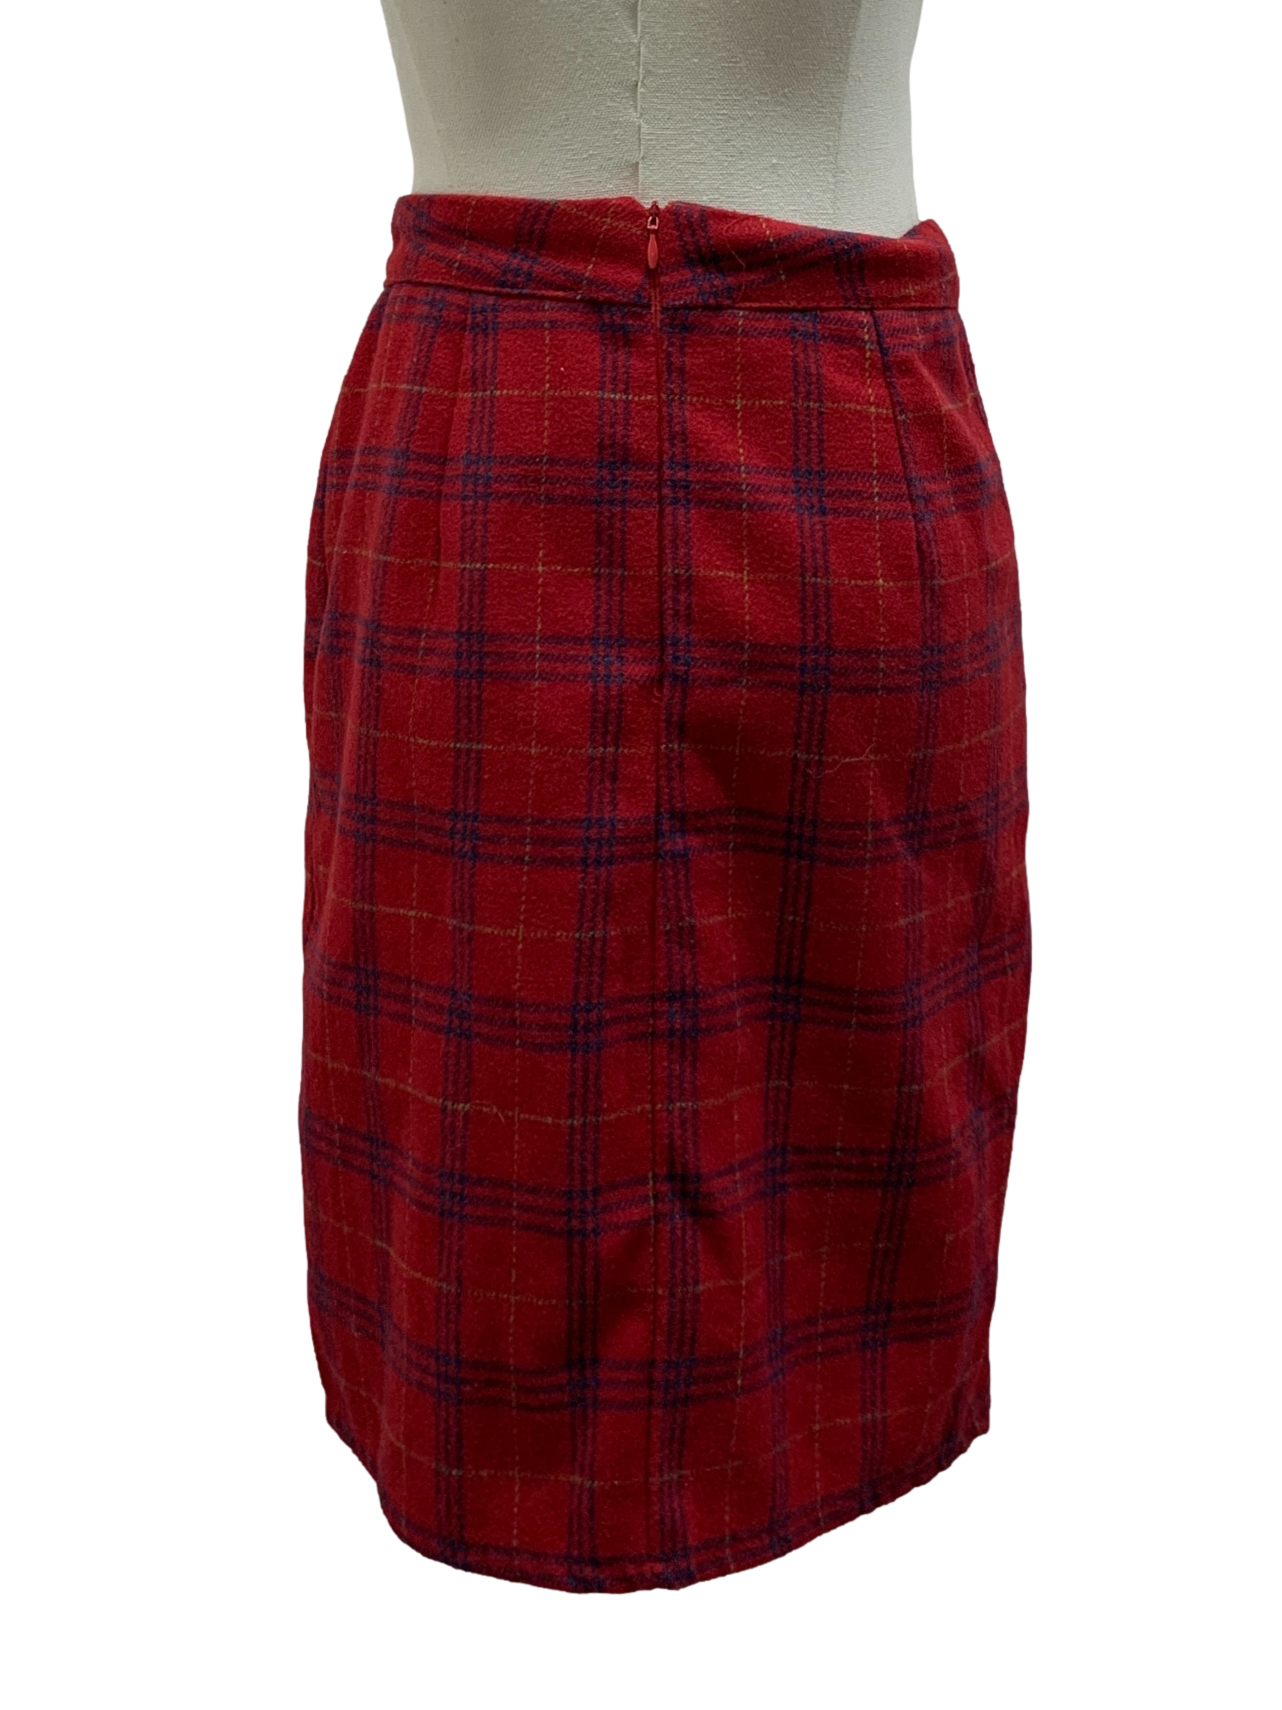 Crimson Red Plaids Skirt